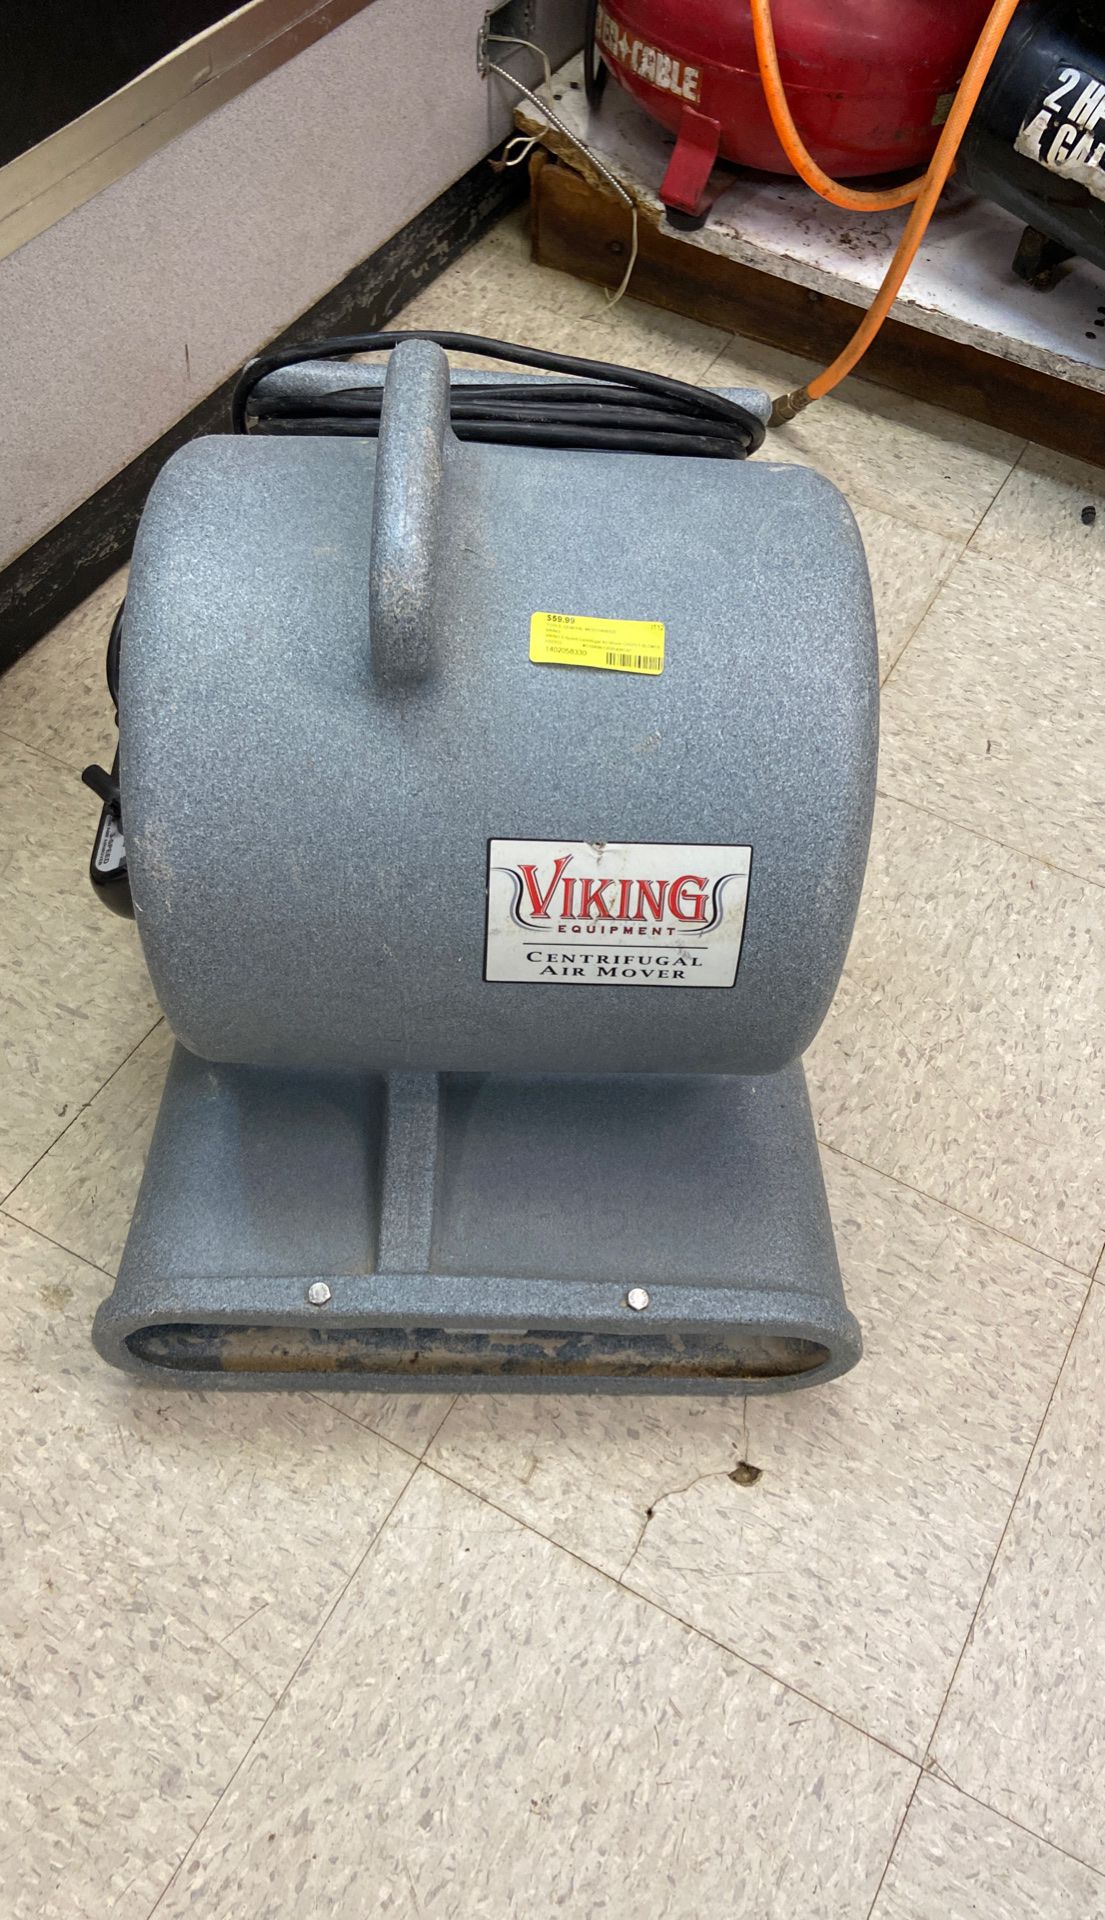 Viking brand air mover